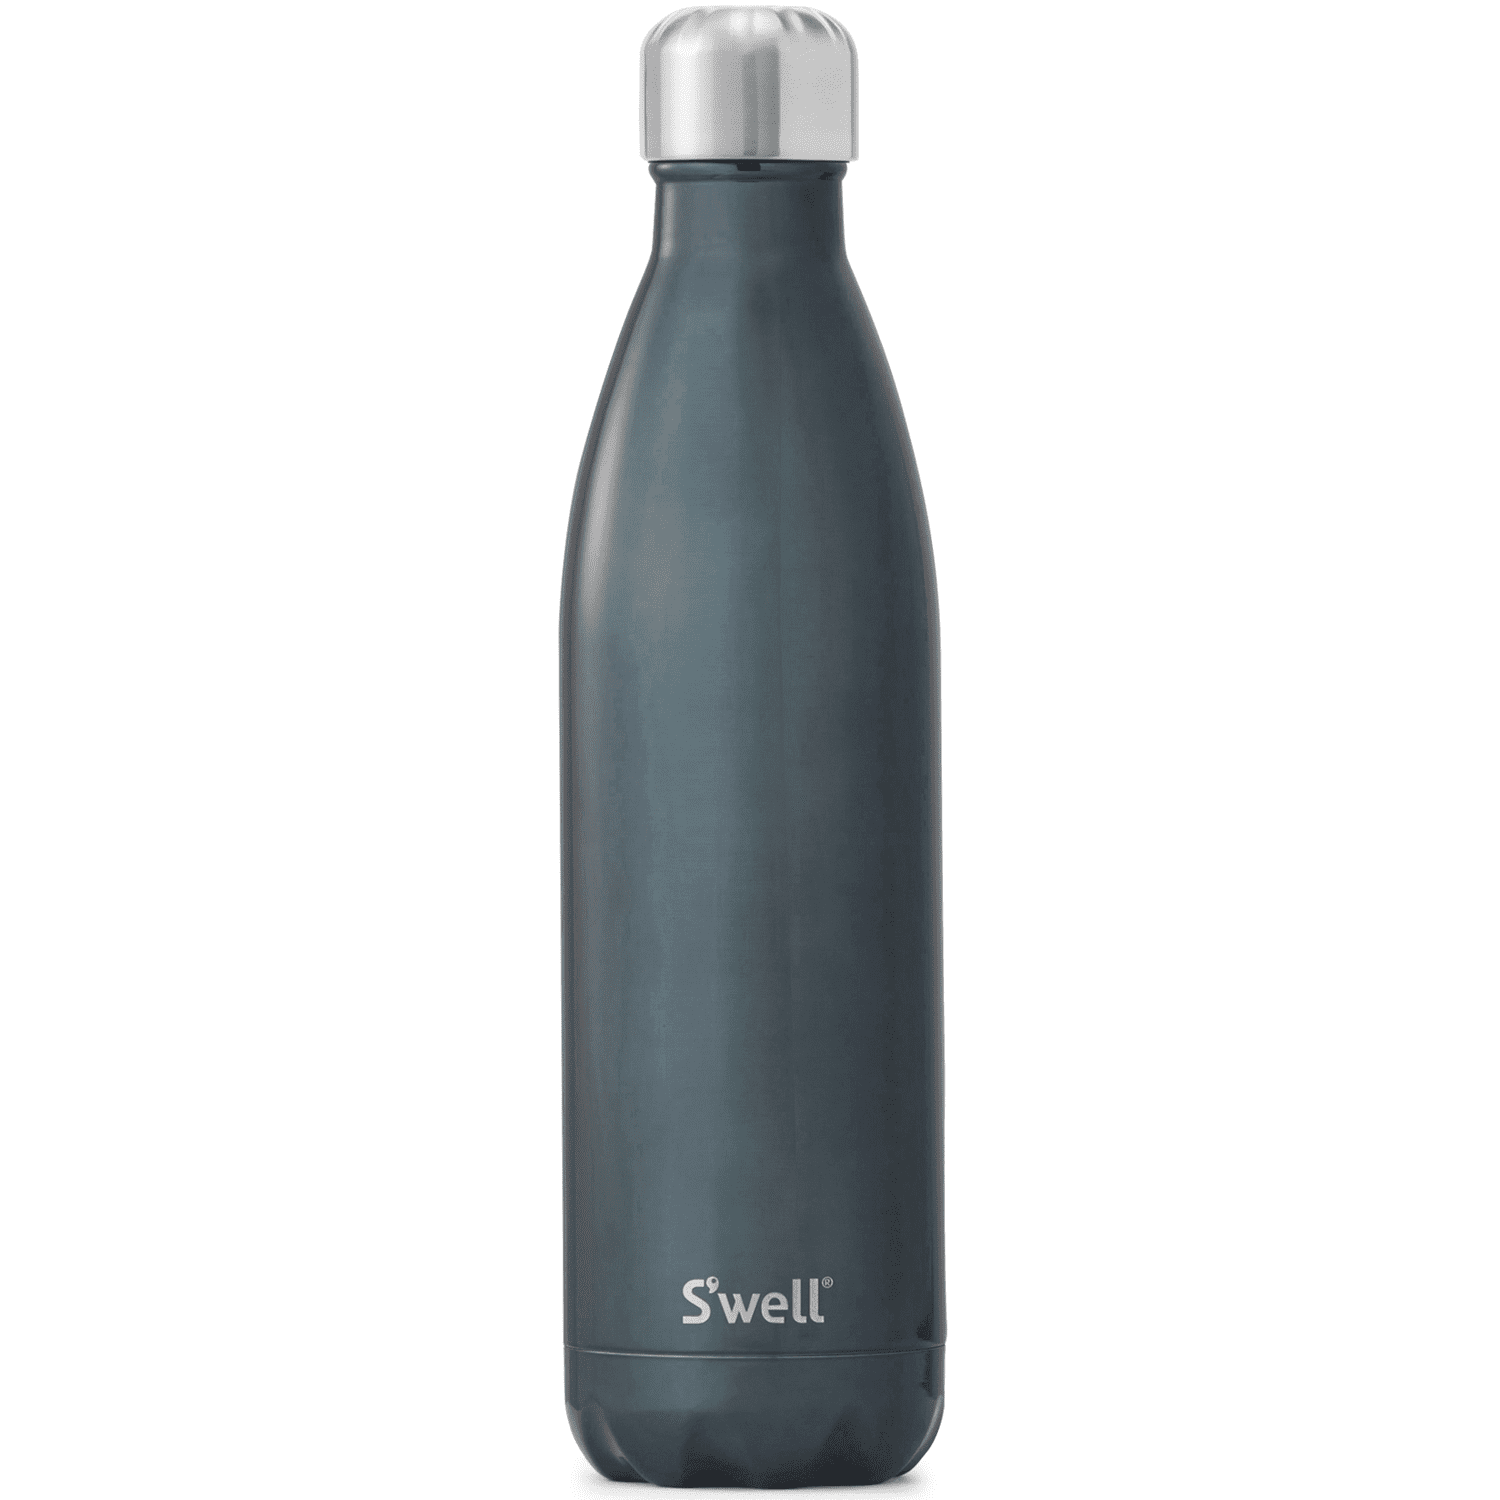 Hot Water Bottle by Sänger